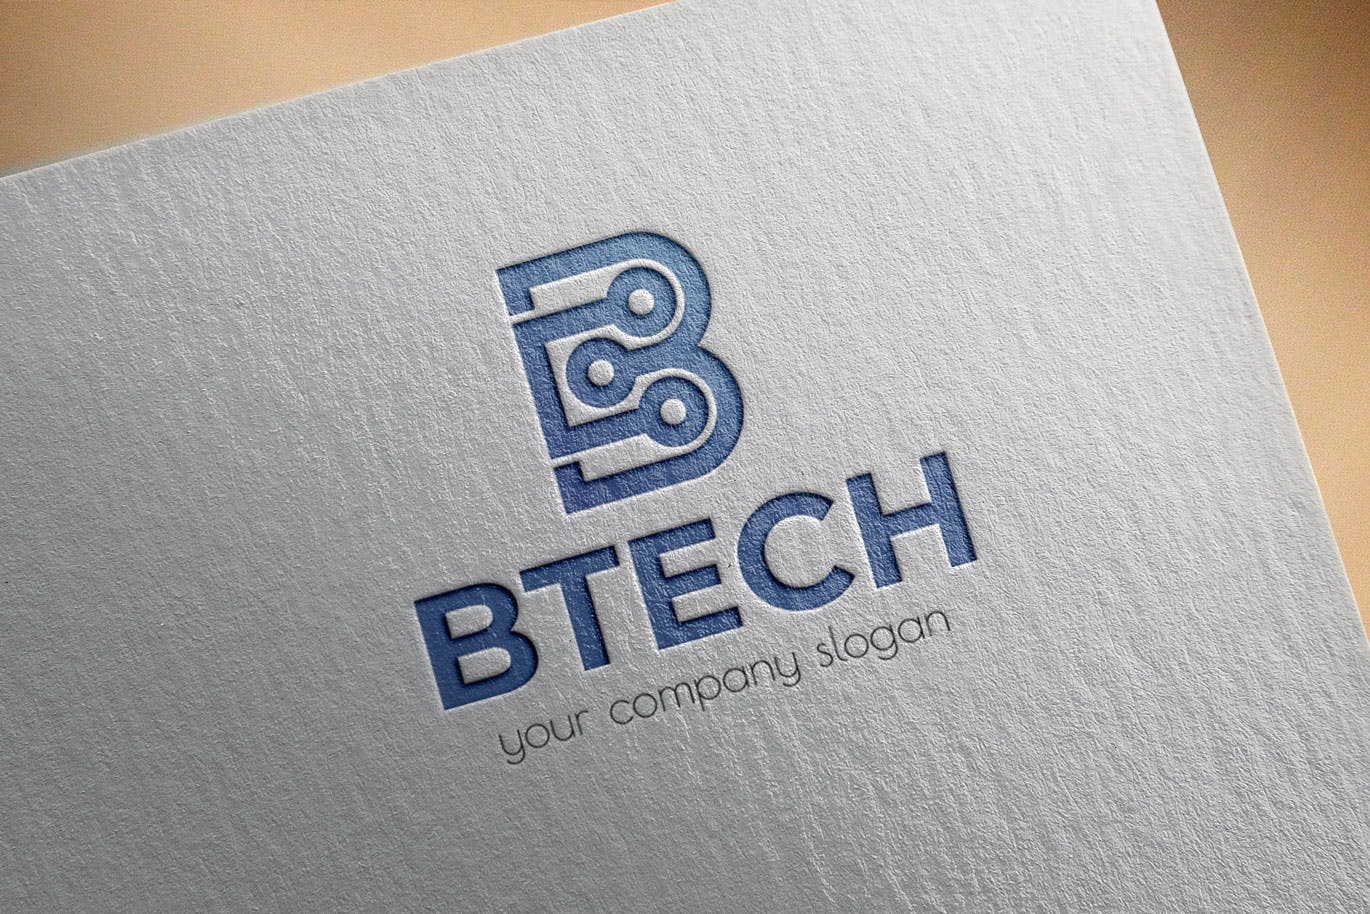 基于B字母图形的企业Logo设计第一素材精选模板 Letter Based Business Logo Template插图(2)